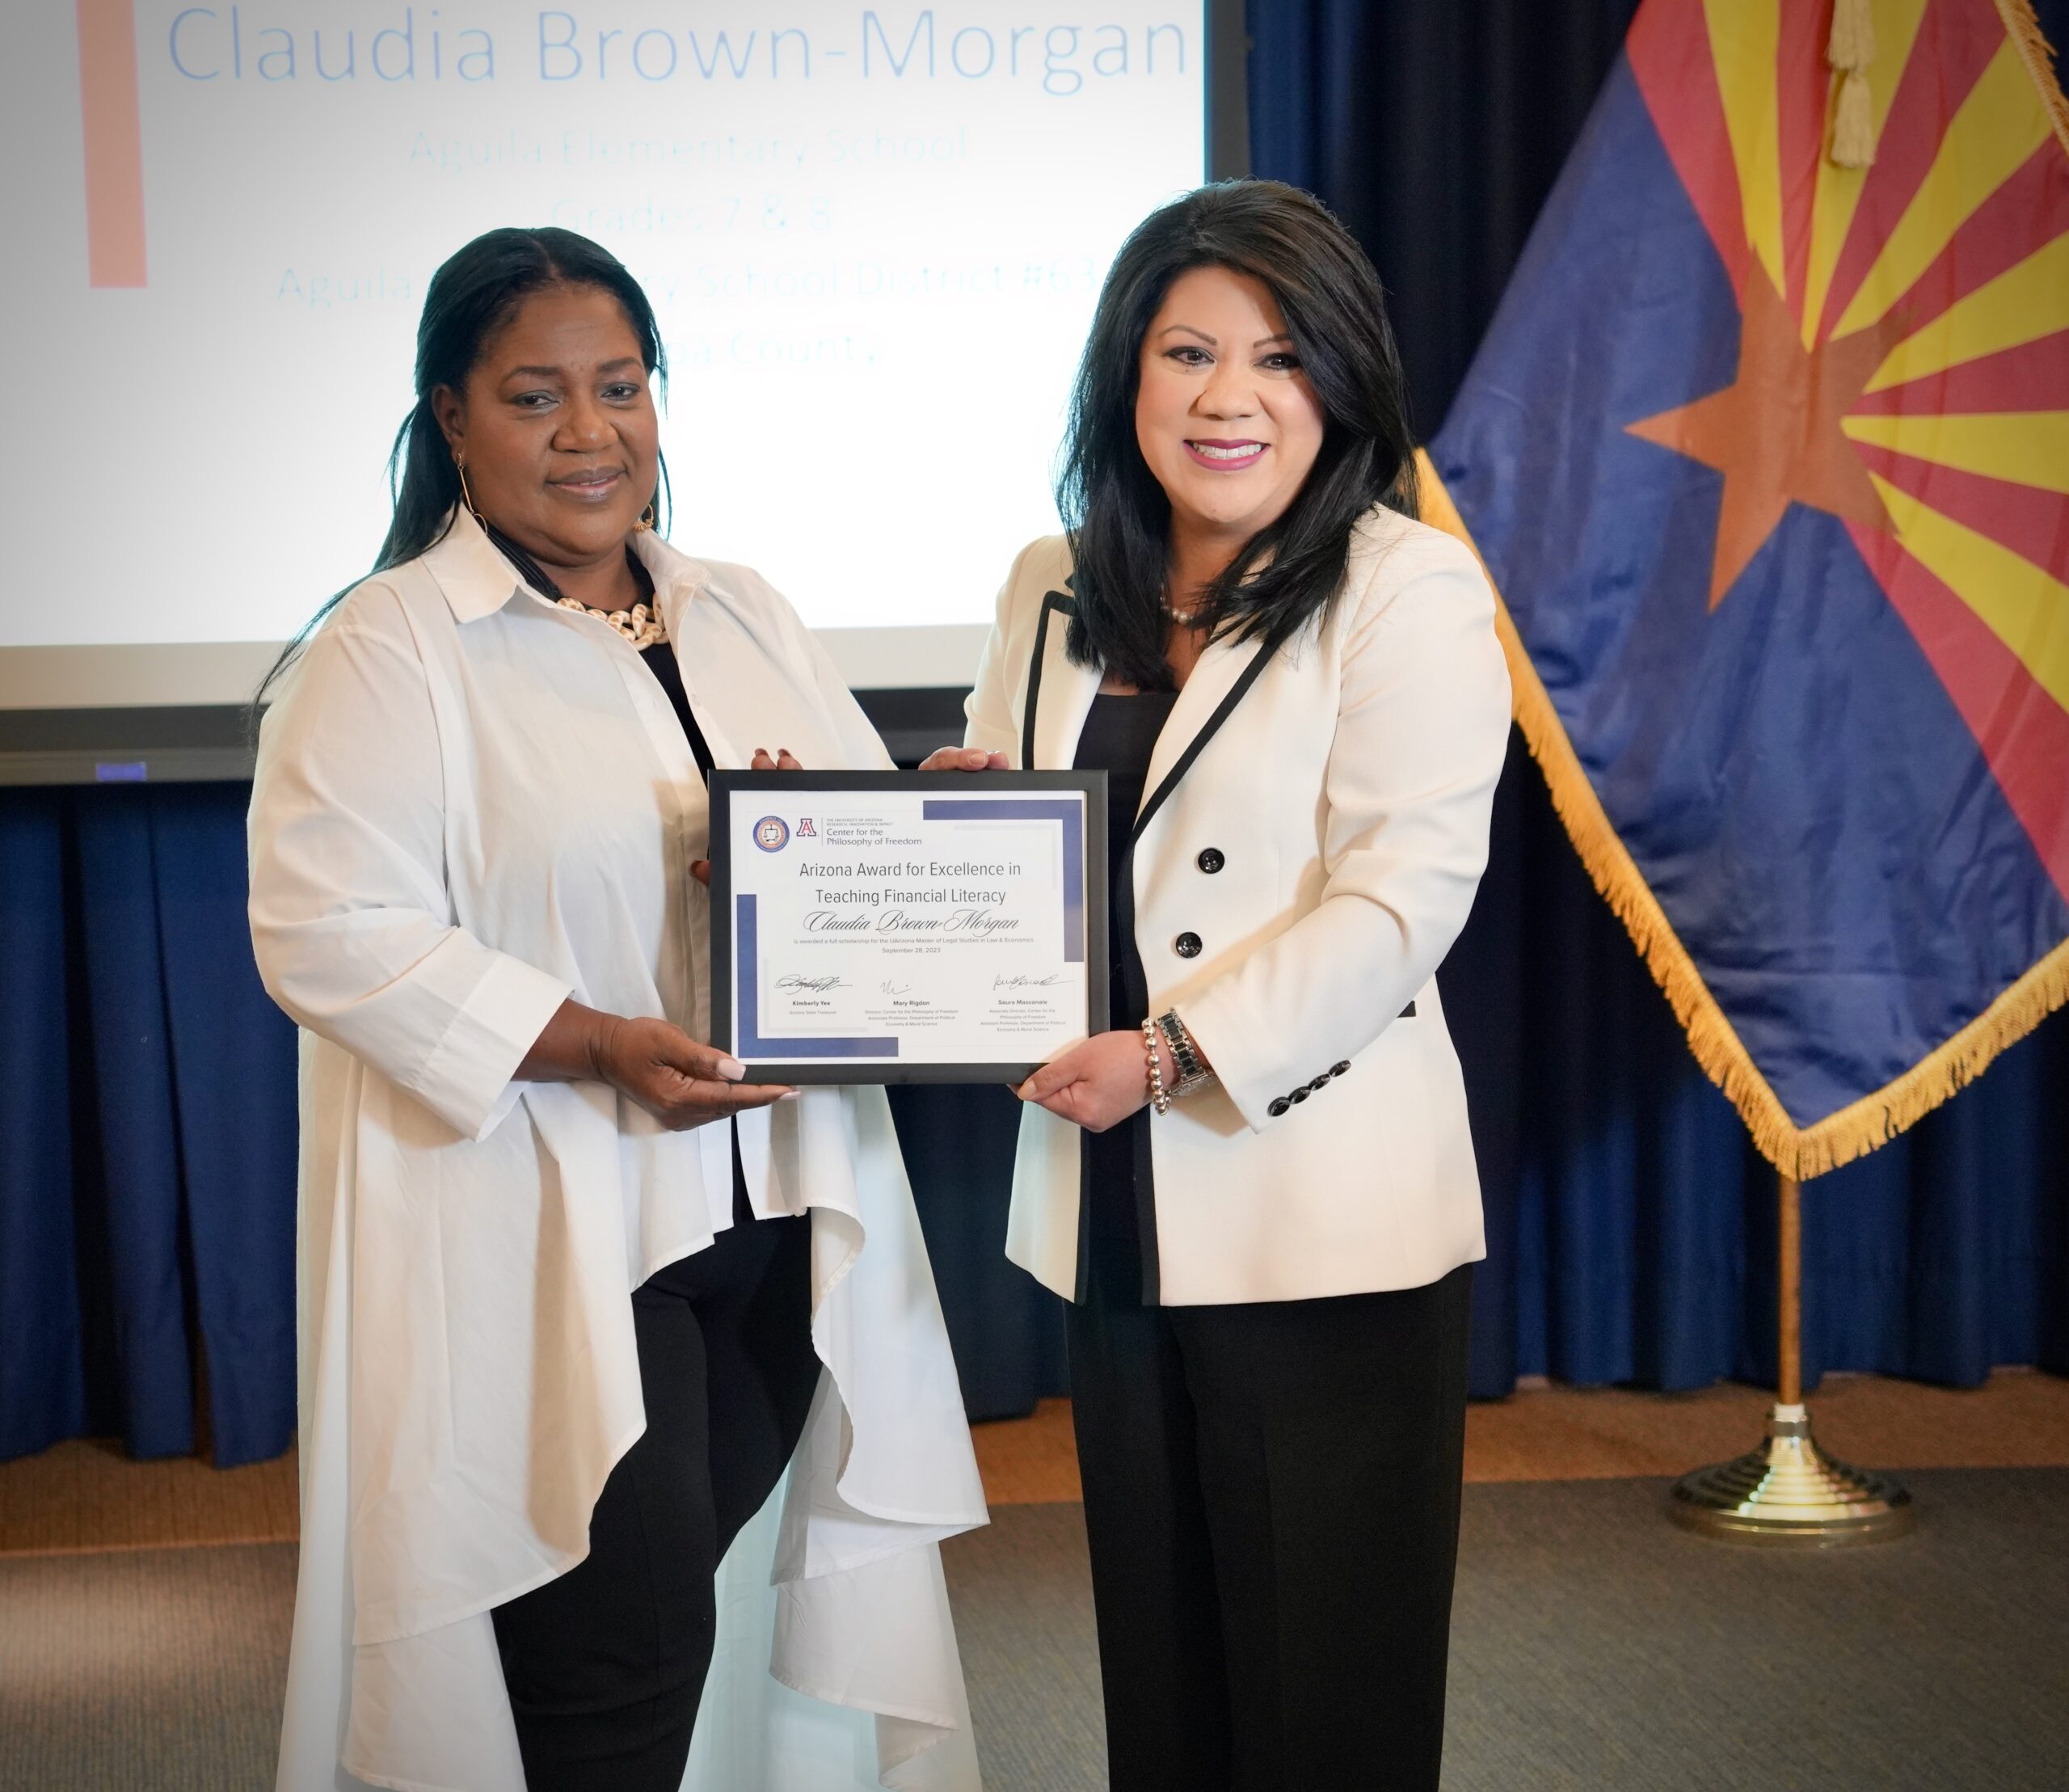 Claudia Brown-Morgan with AZ State Treasurer Kimberly Yee